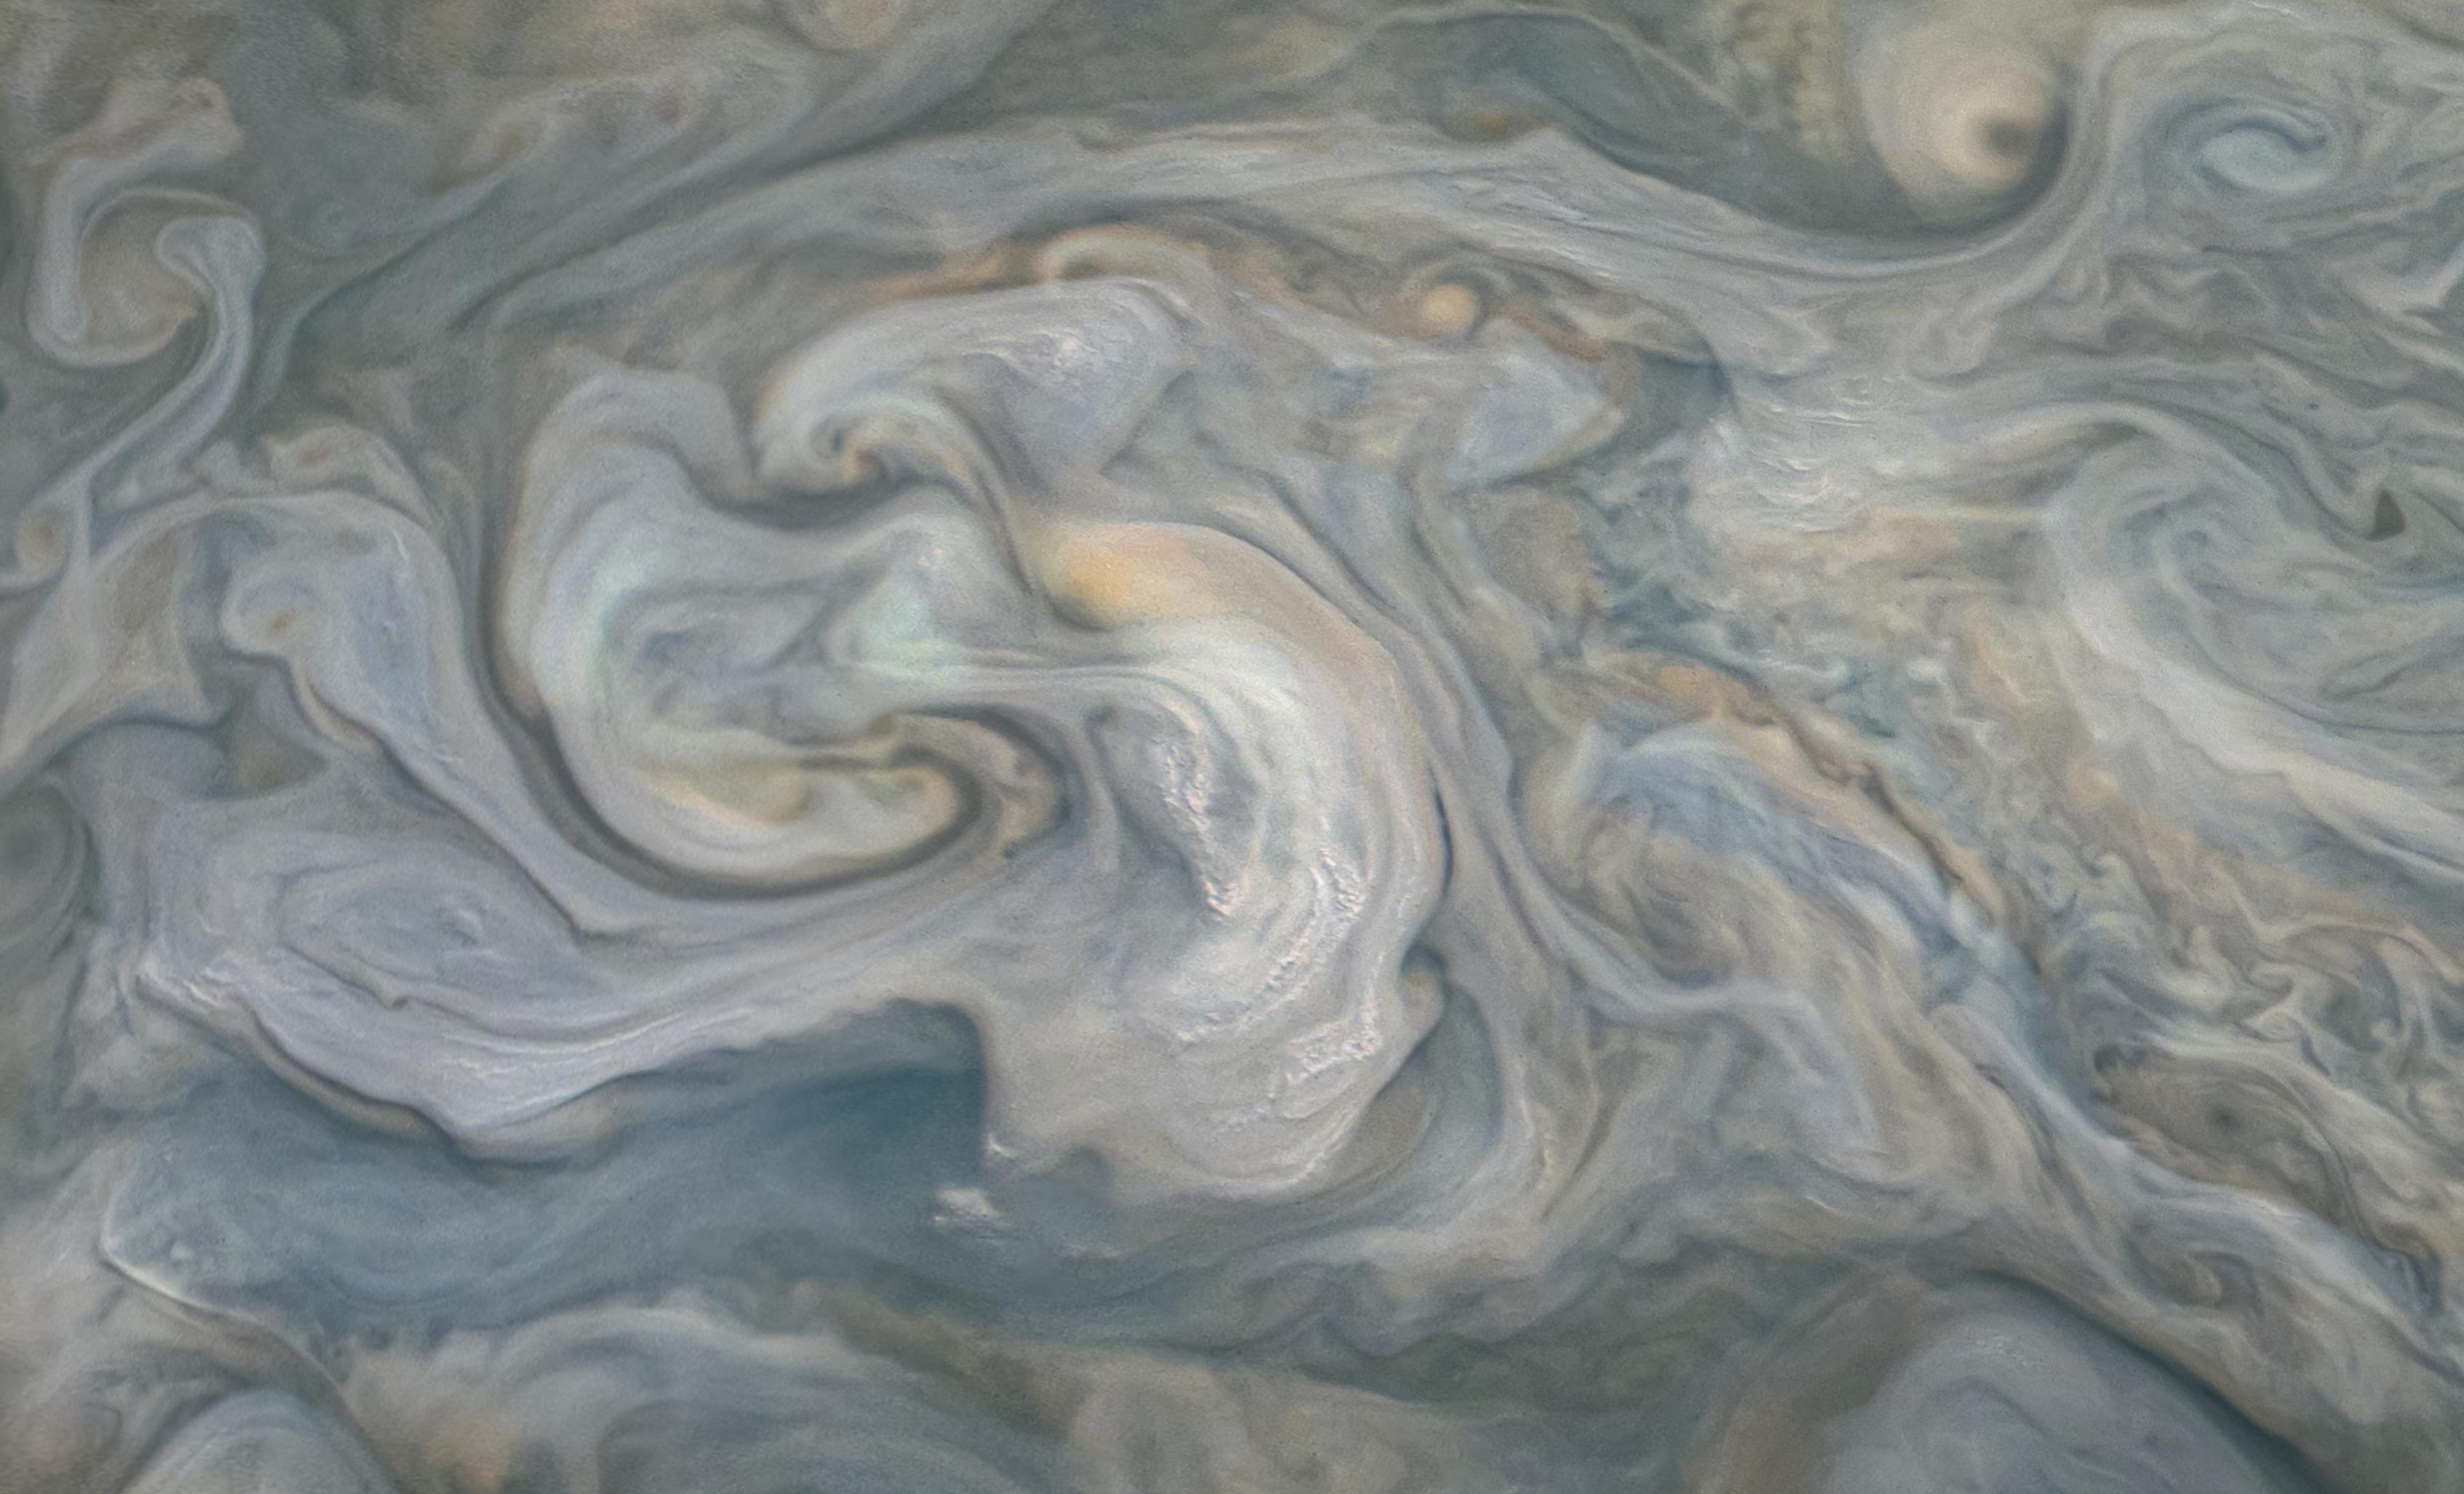 PIA24041: When Jupiter's Clouds Pop Up